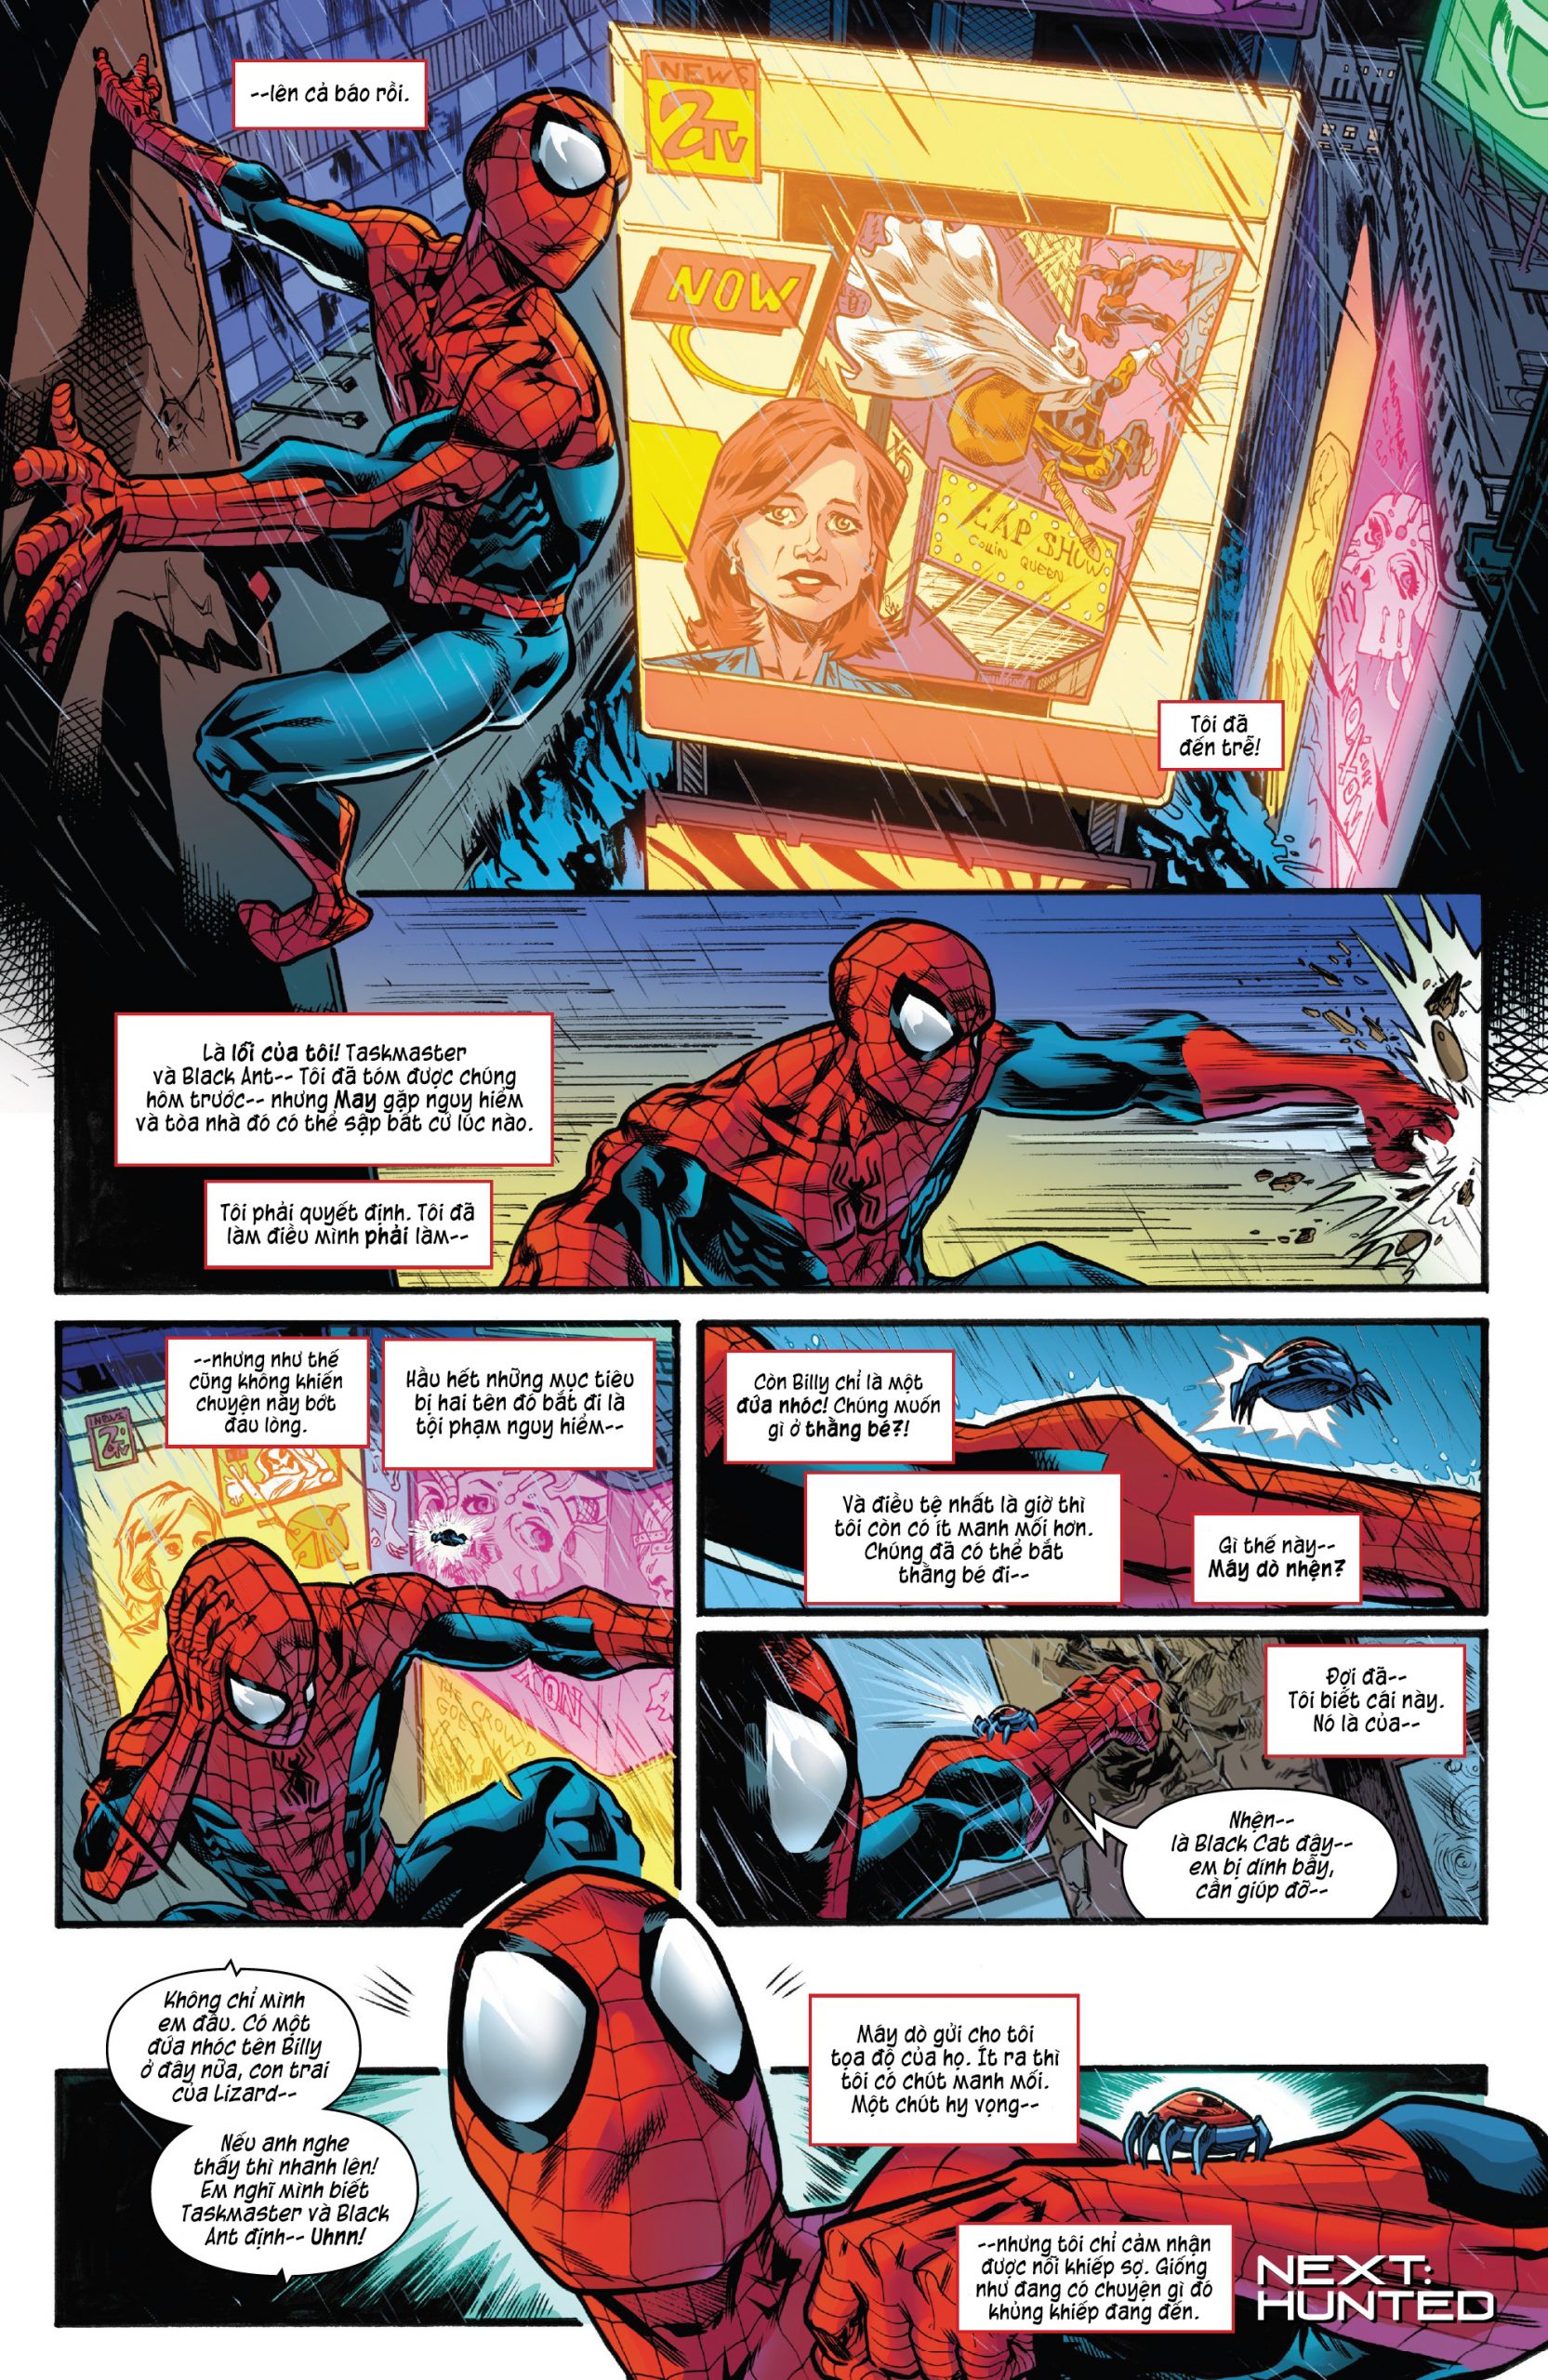 https://langgeek.net/wp-content/uploads/2022/01/Amazing-Spider-Man-016-031-scaled.jpg